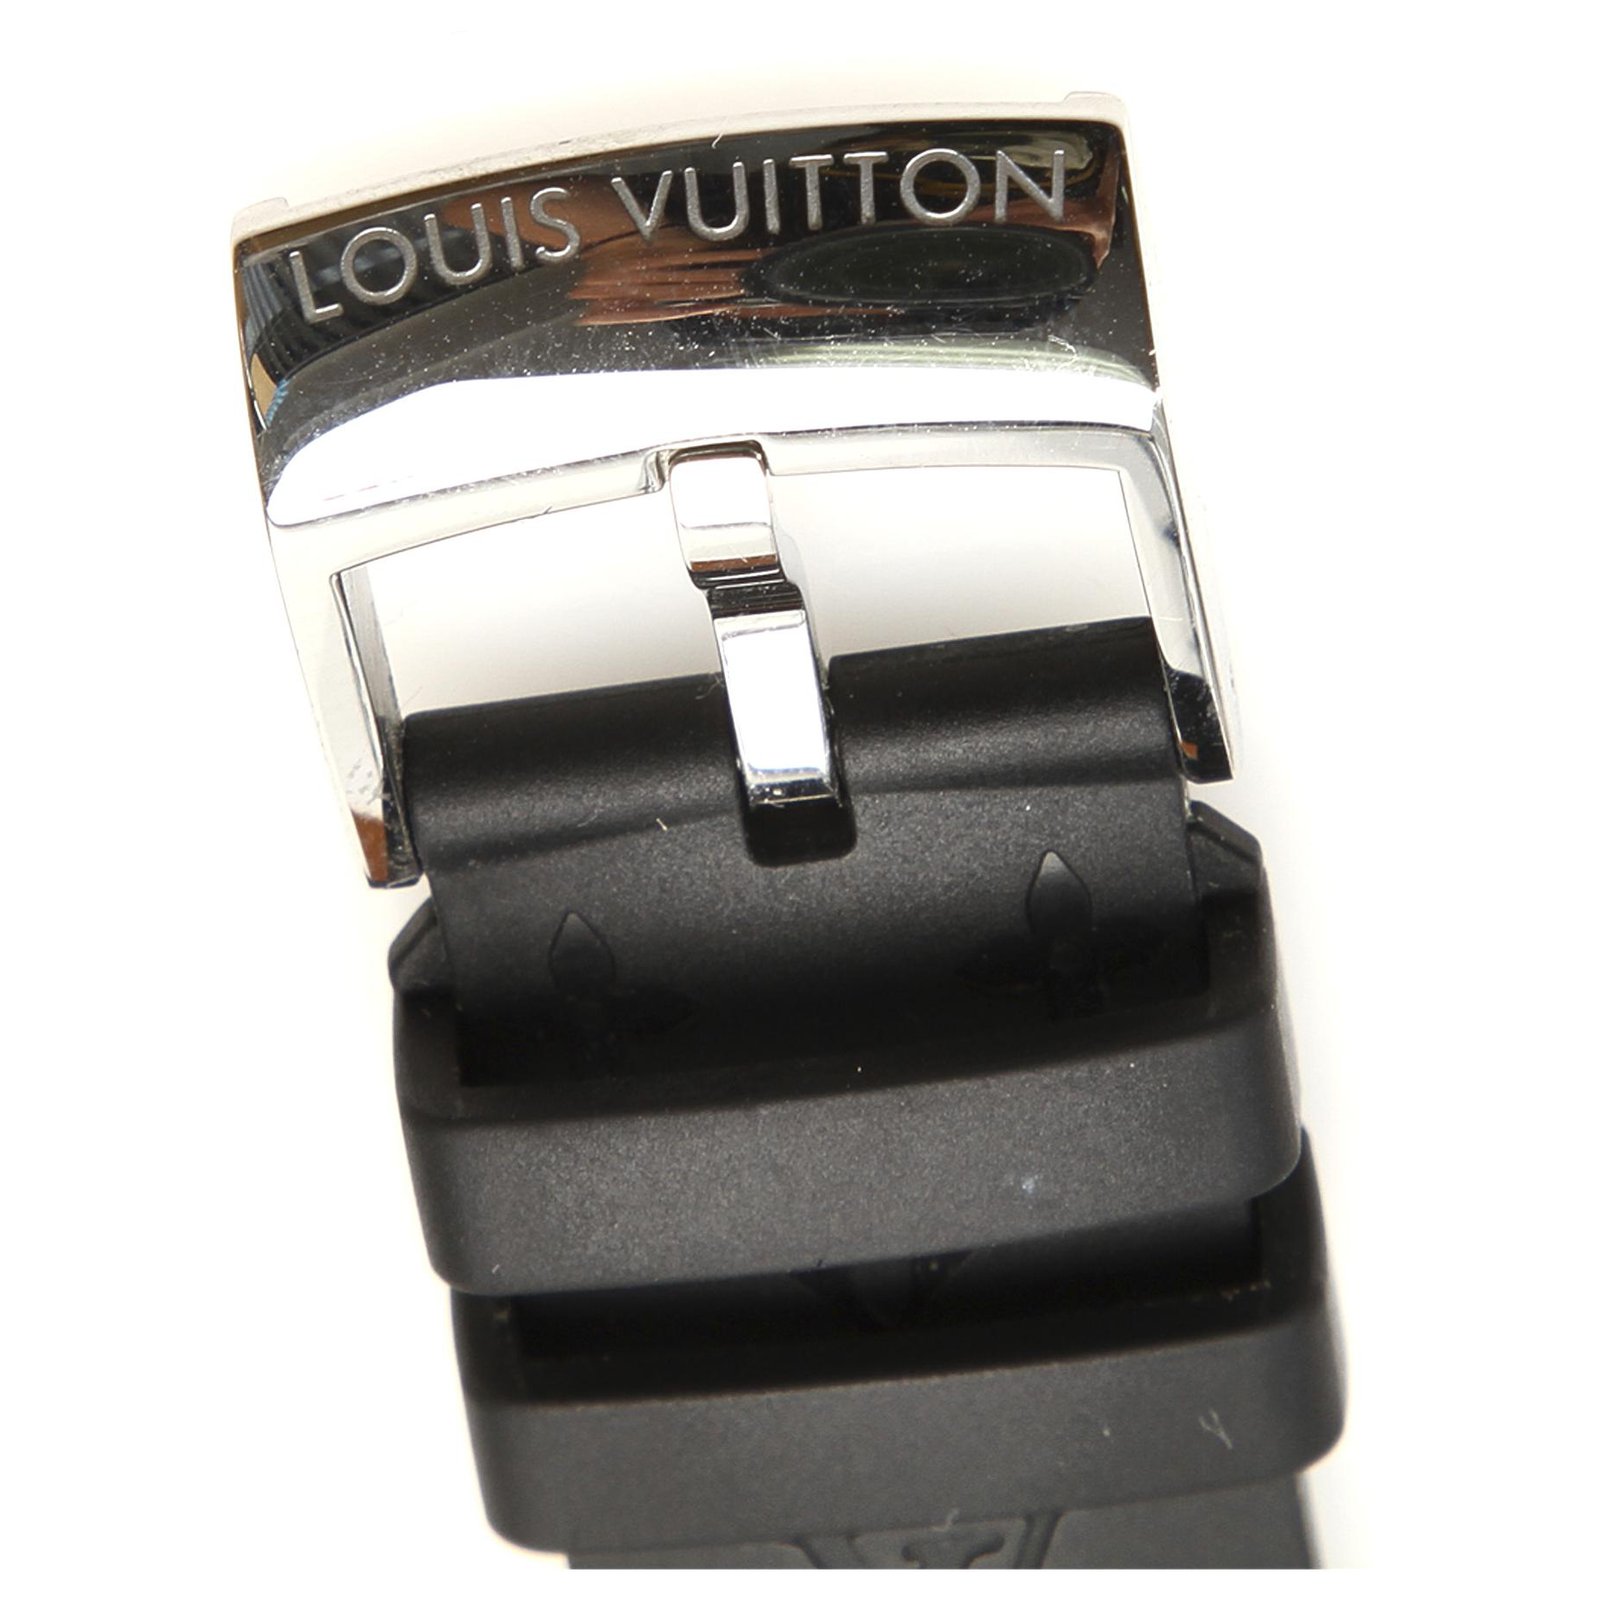 Relojes Louis vuitton Negro de en Acero - 30331037